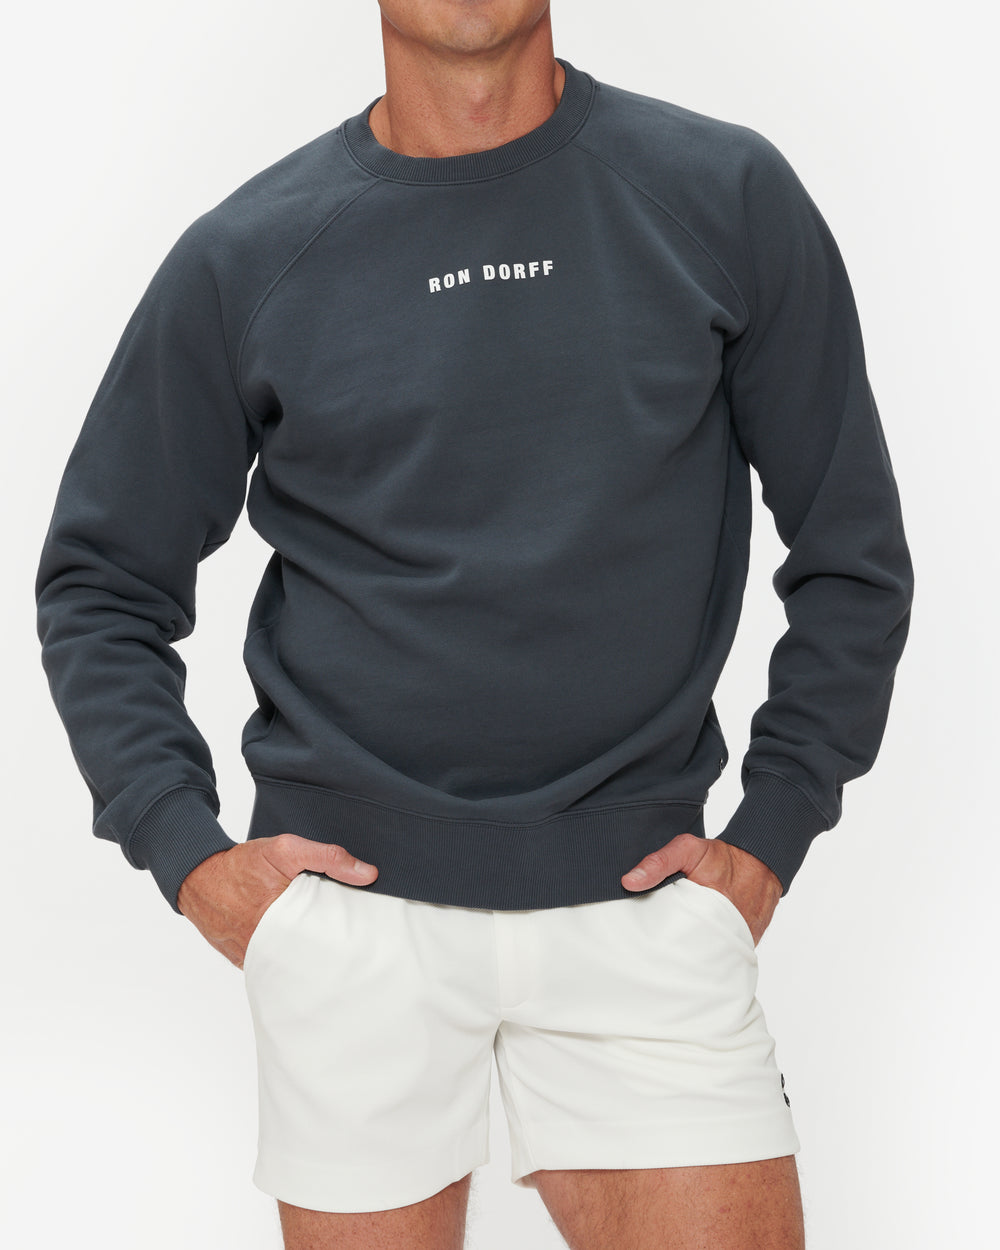 Ron Dorff Organic Cotton Sweatshirt